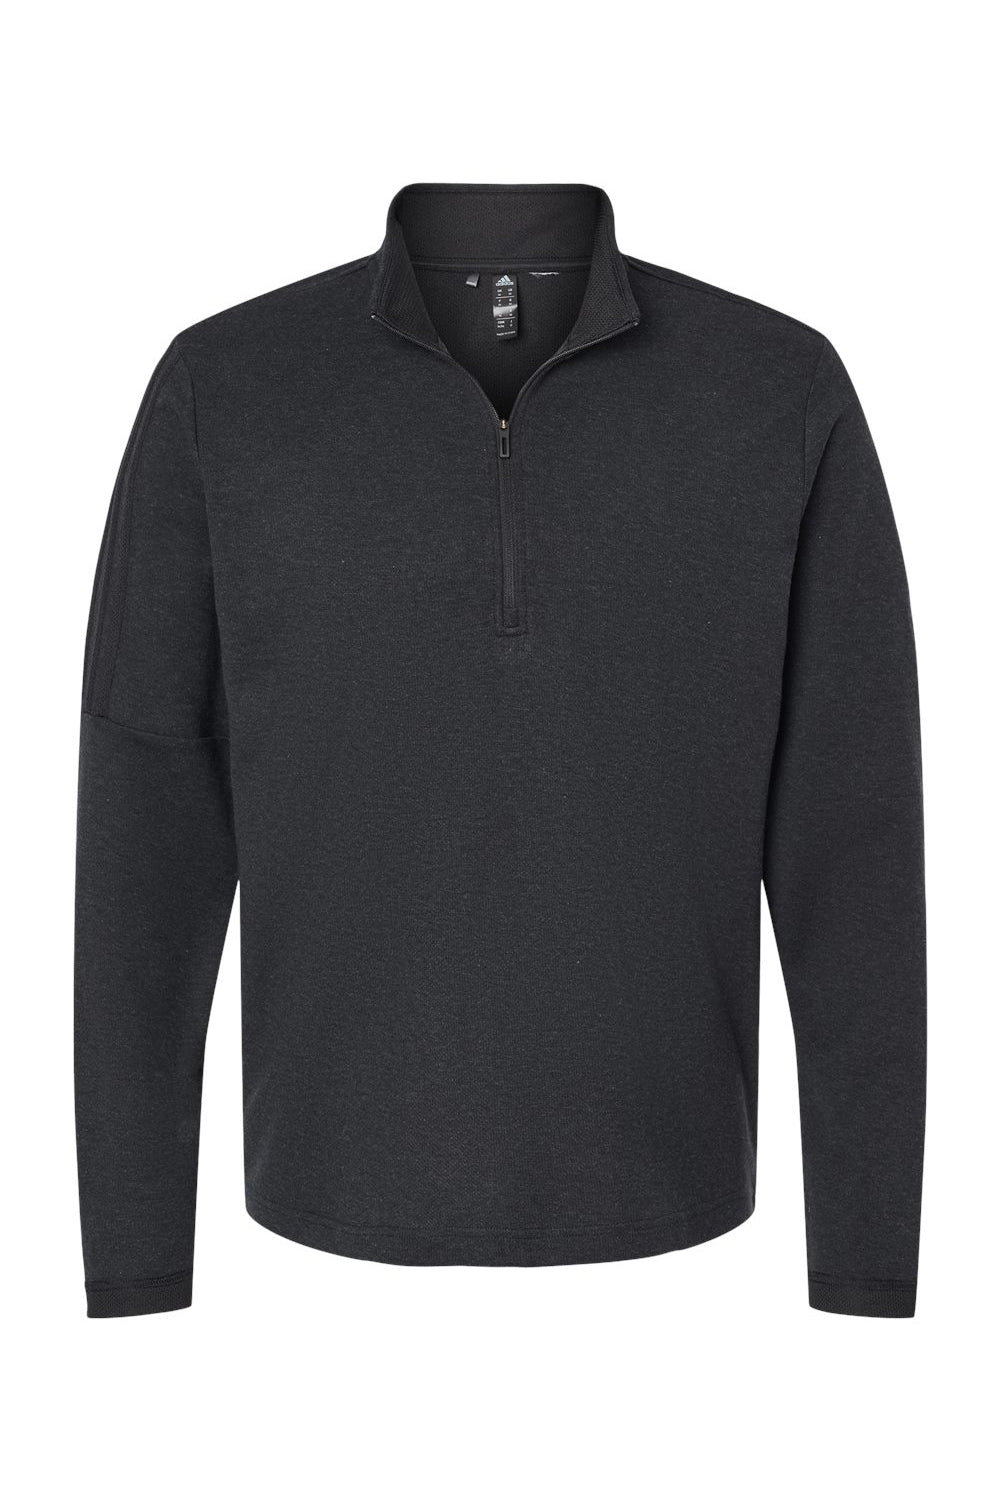 Adidas A554 Mens 3 Stripes 1/4 Zip Sweater Black Melange Flat Front